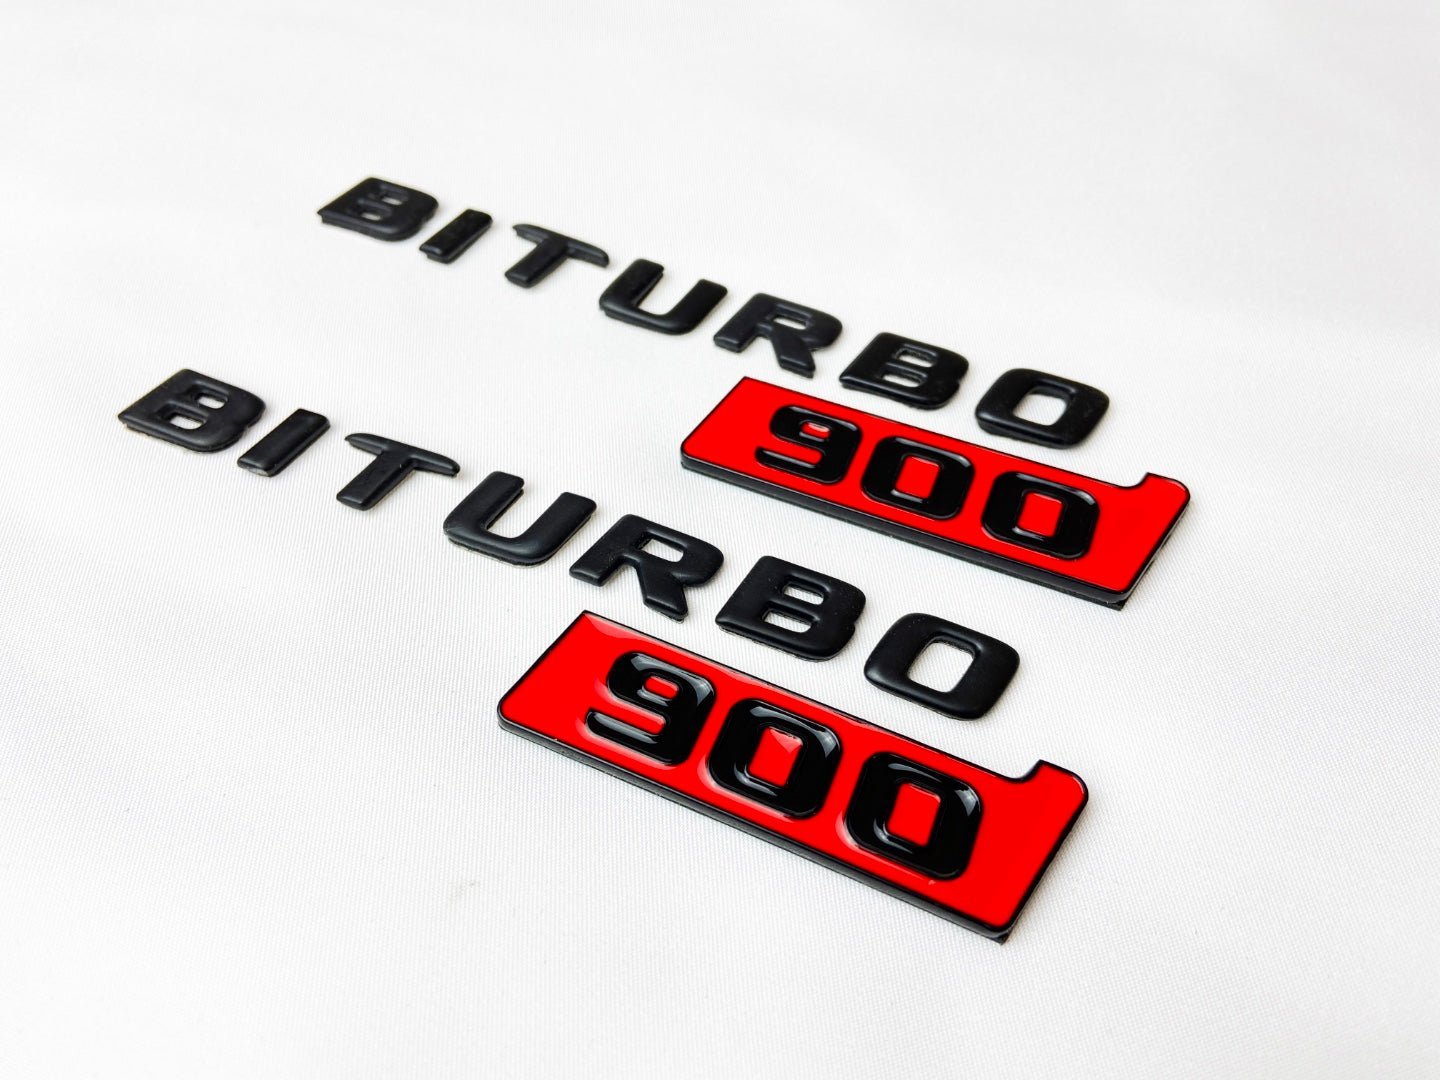 Metallic Brabus Biturbo 900 emblem logo badges set for Mercedes-Benz W463 W463A G-Class